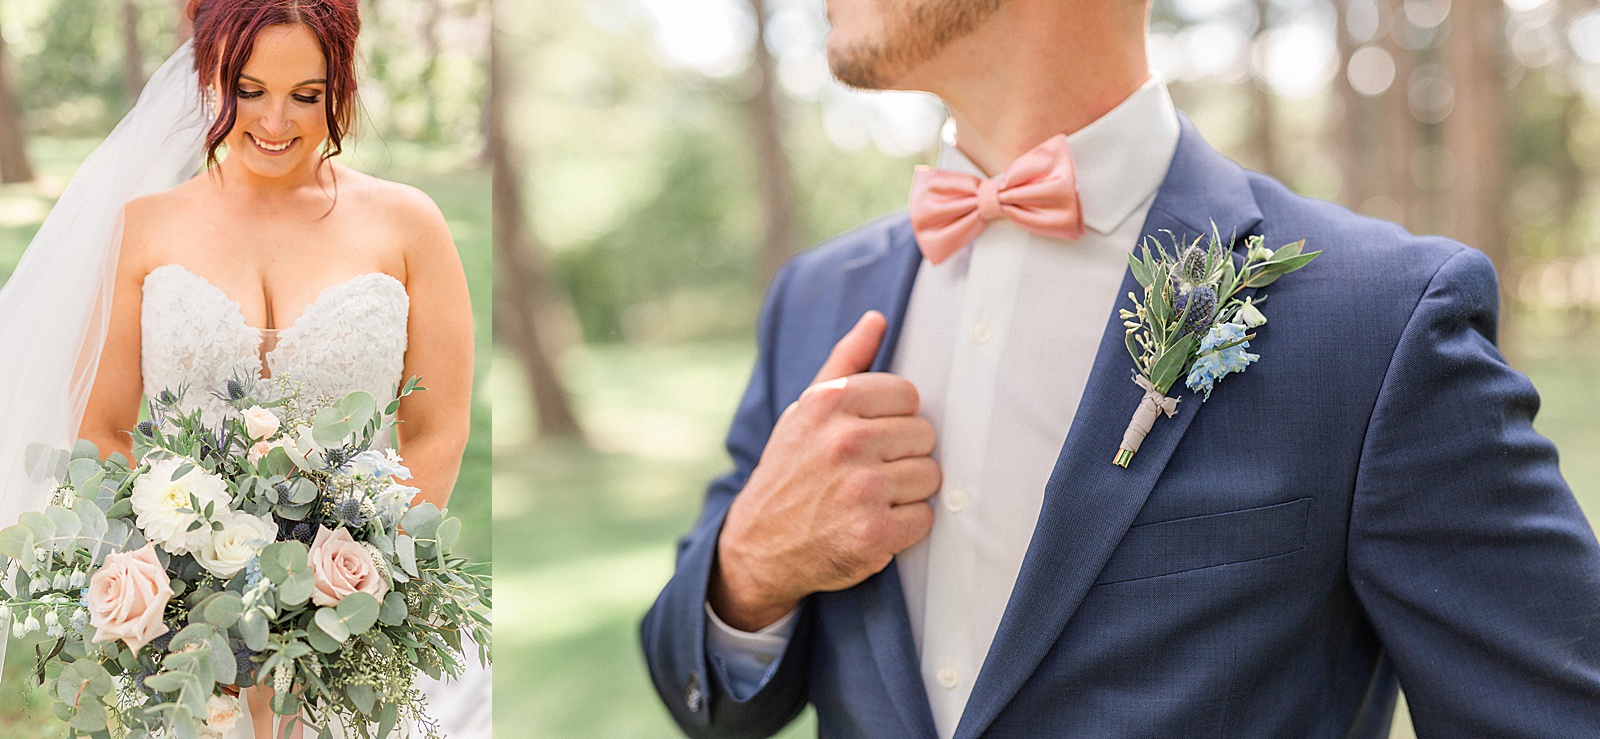 Bride and groom details